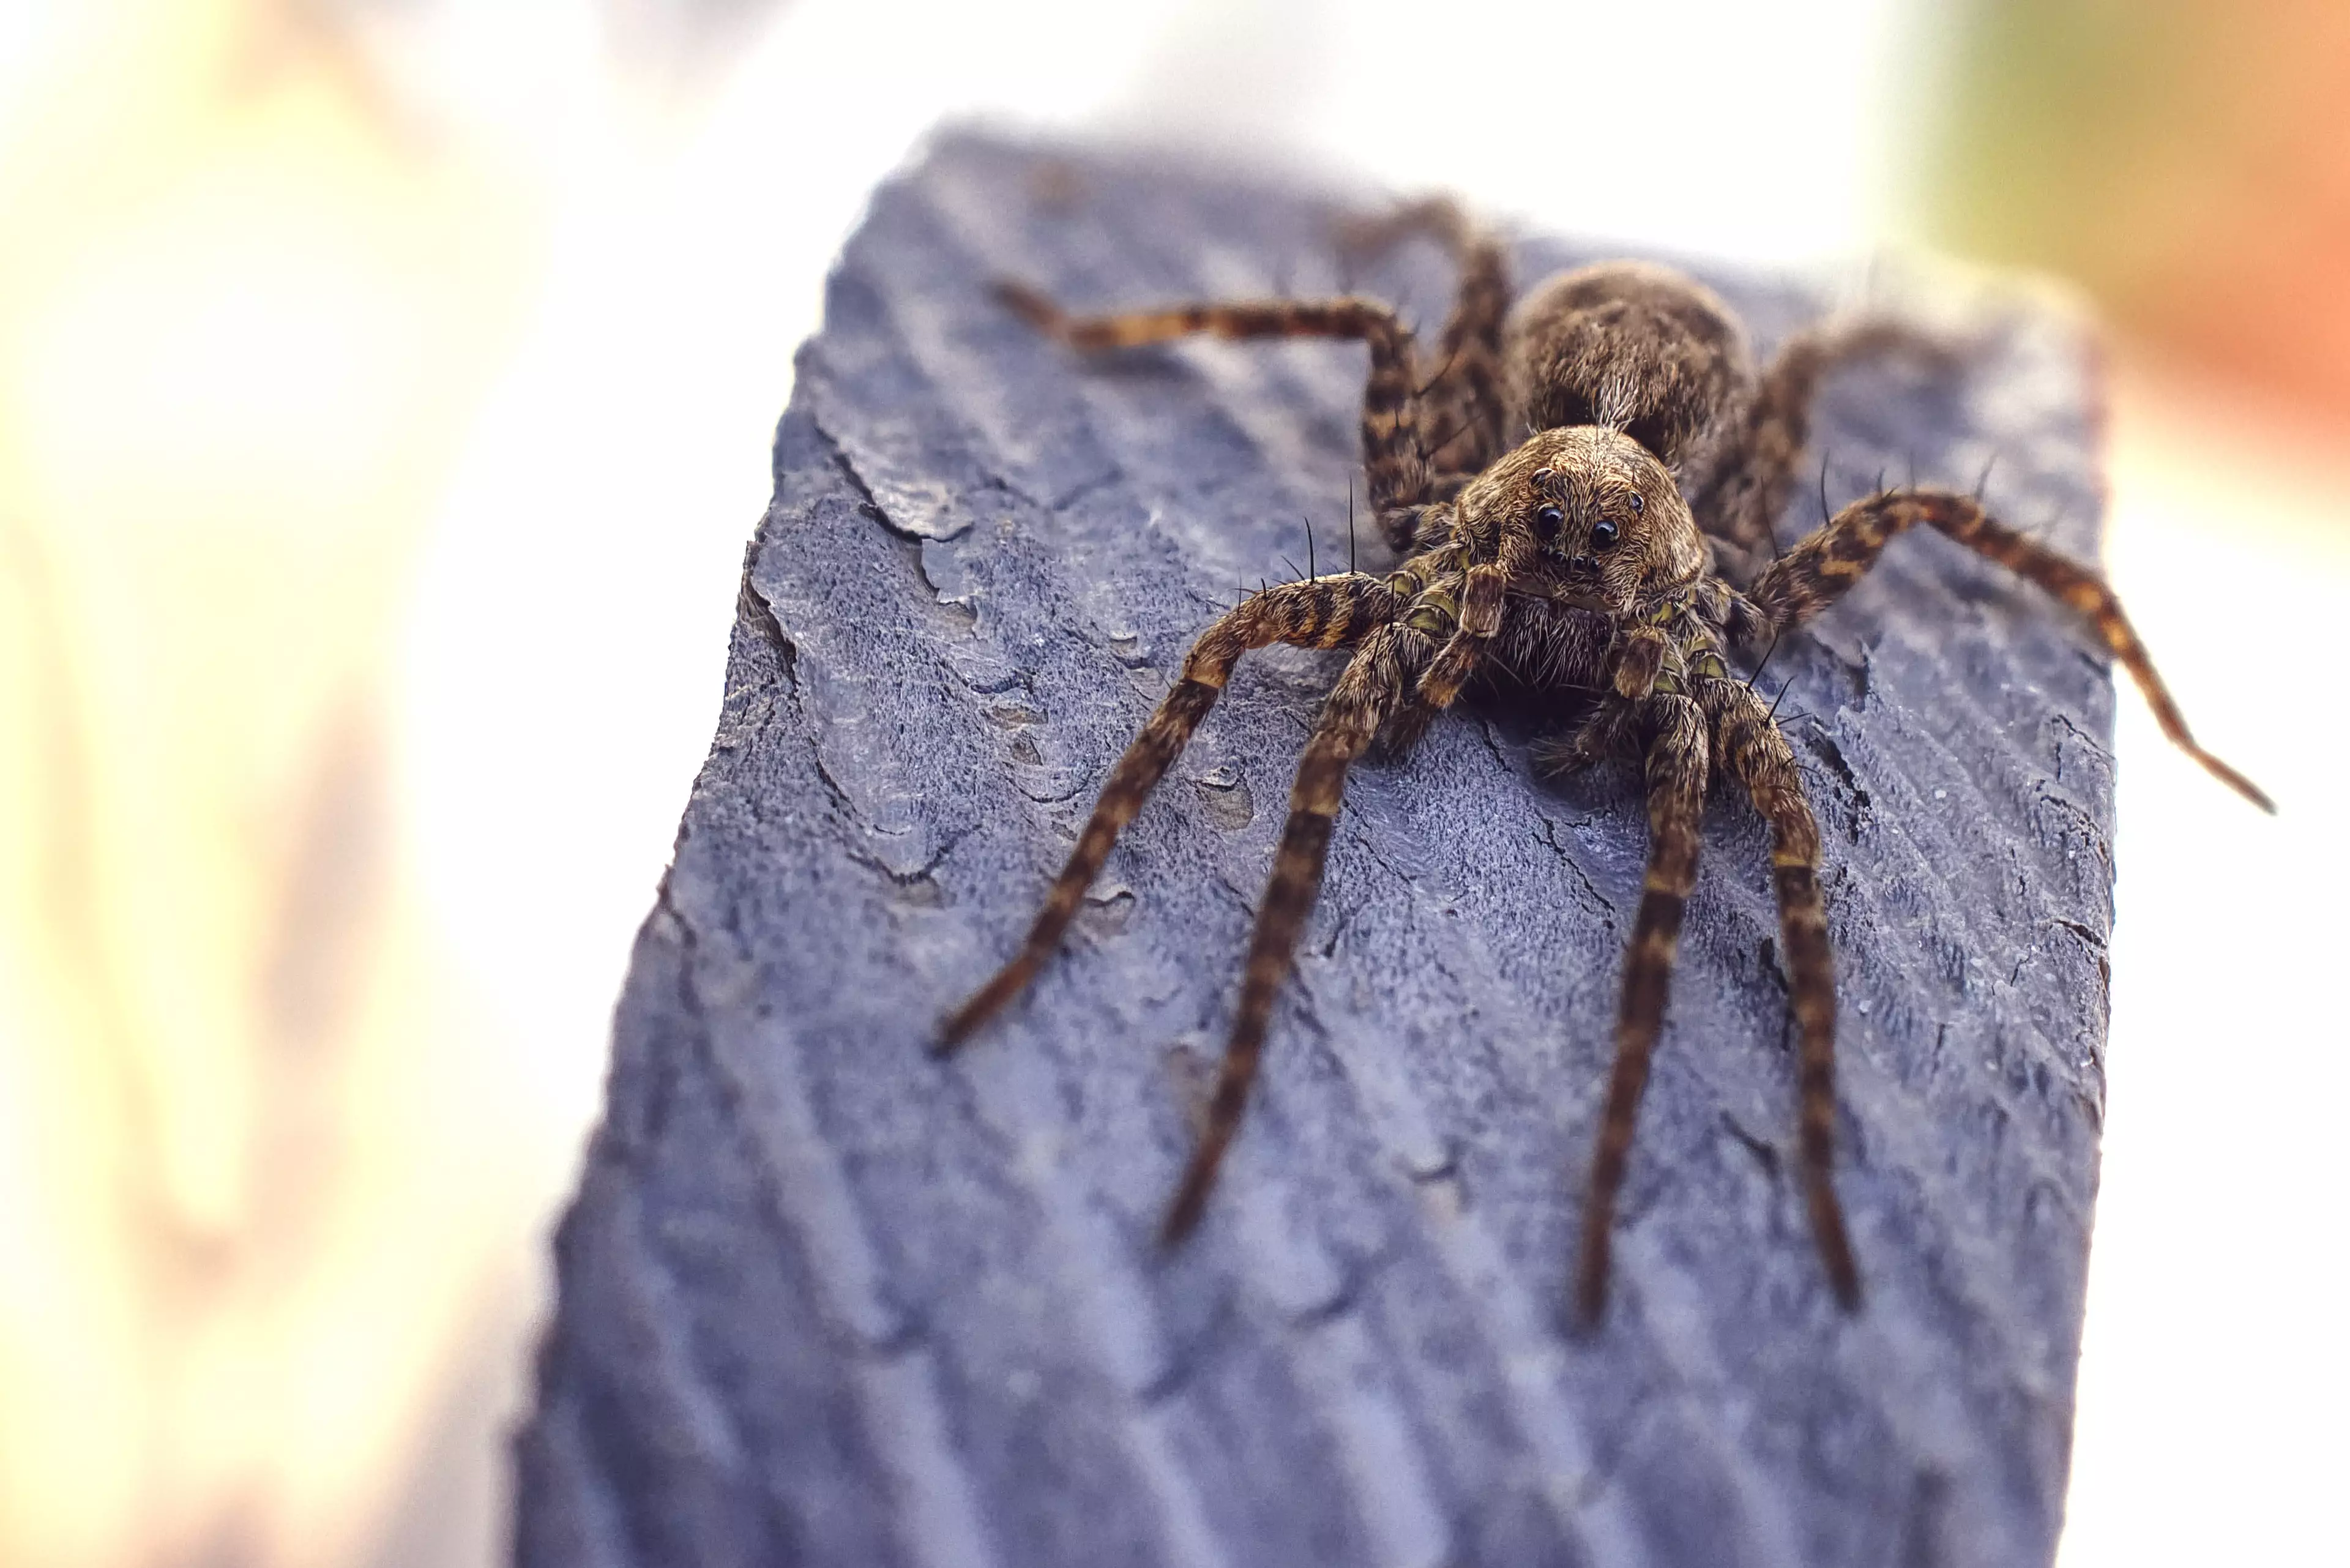 Huntsman spiders are very common in Australia (